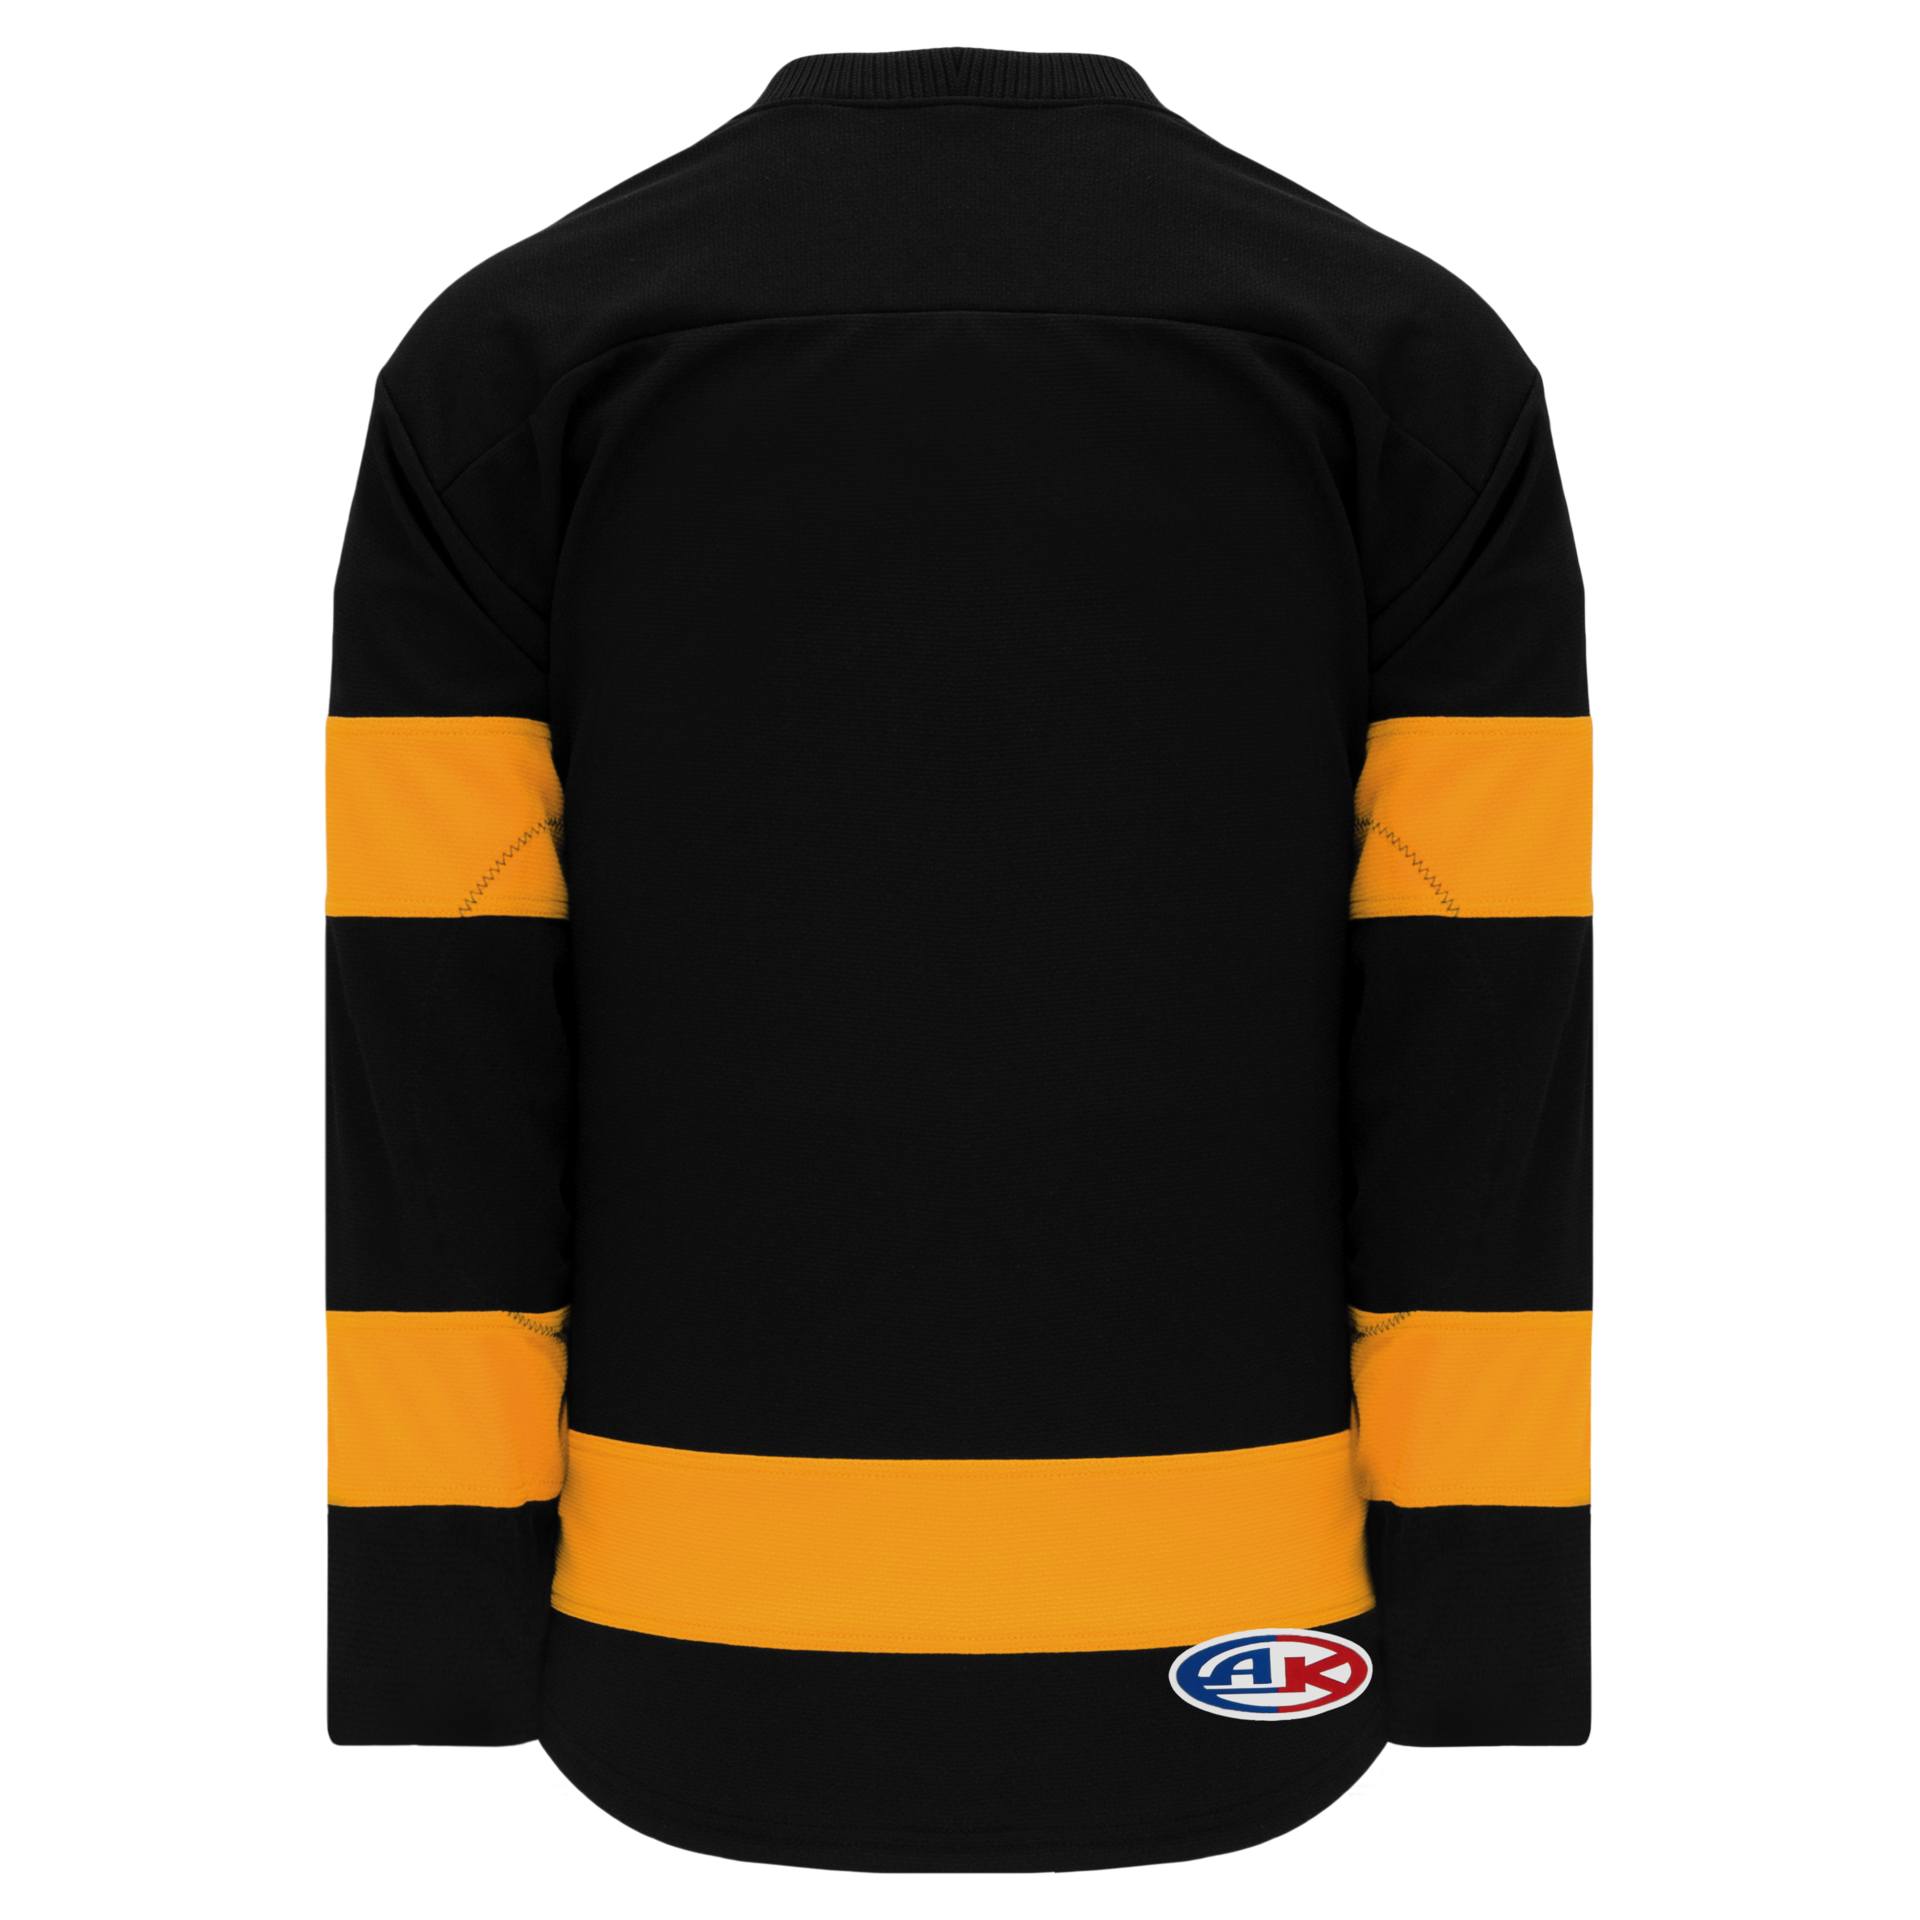 Youth Boston Bruins Black Home Replica Custom Jersey